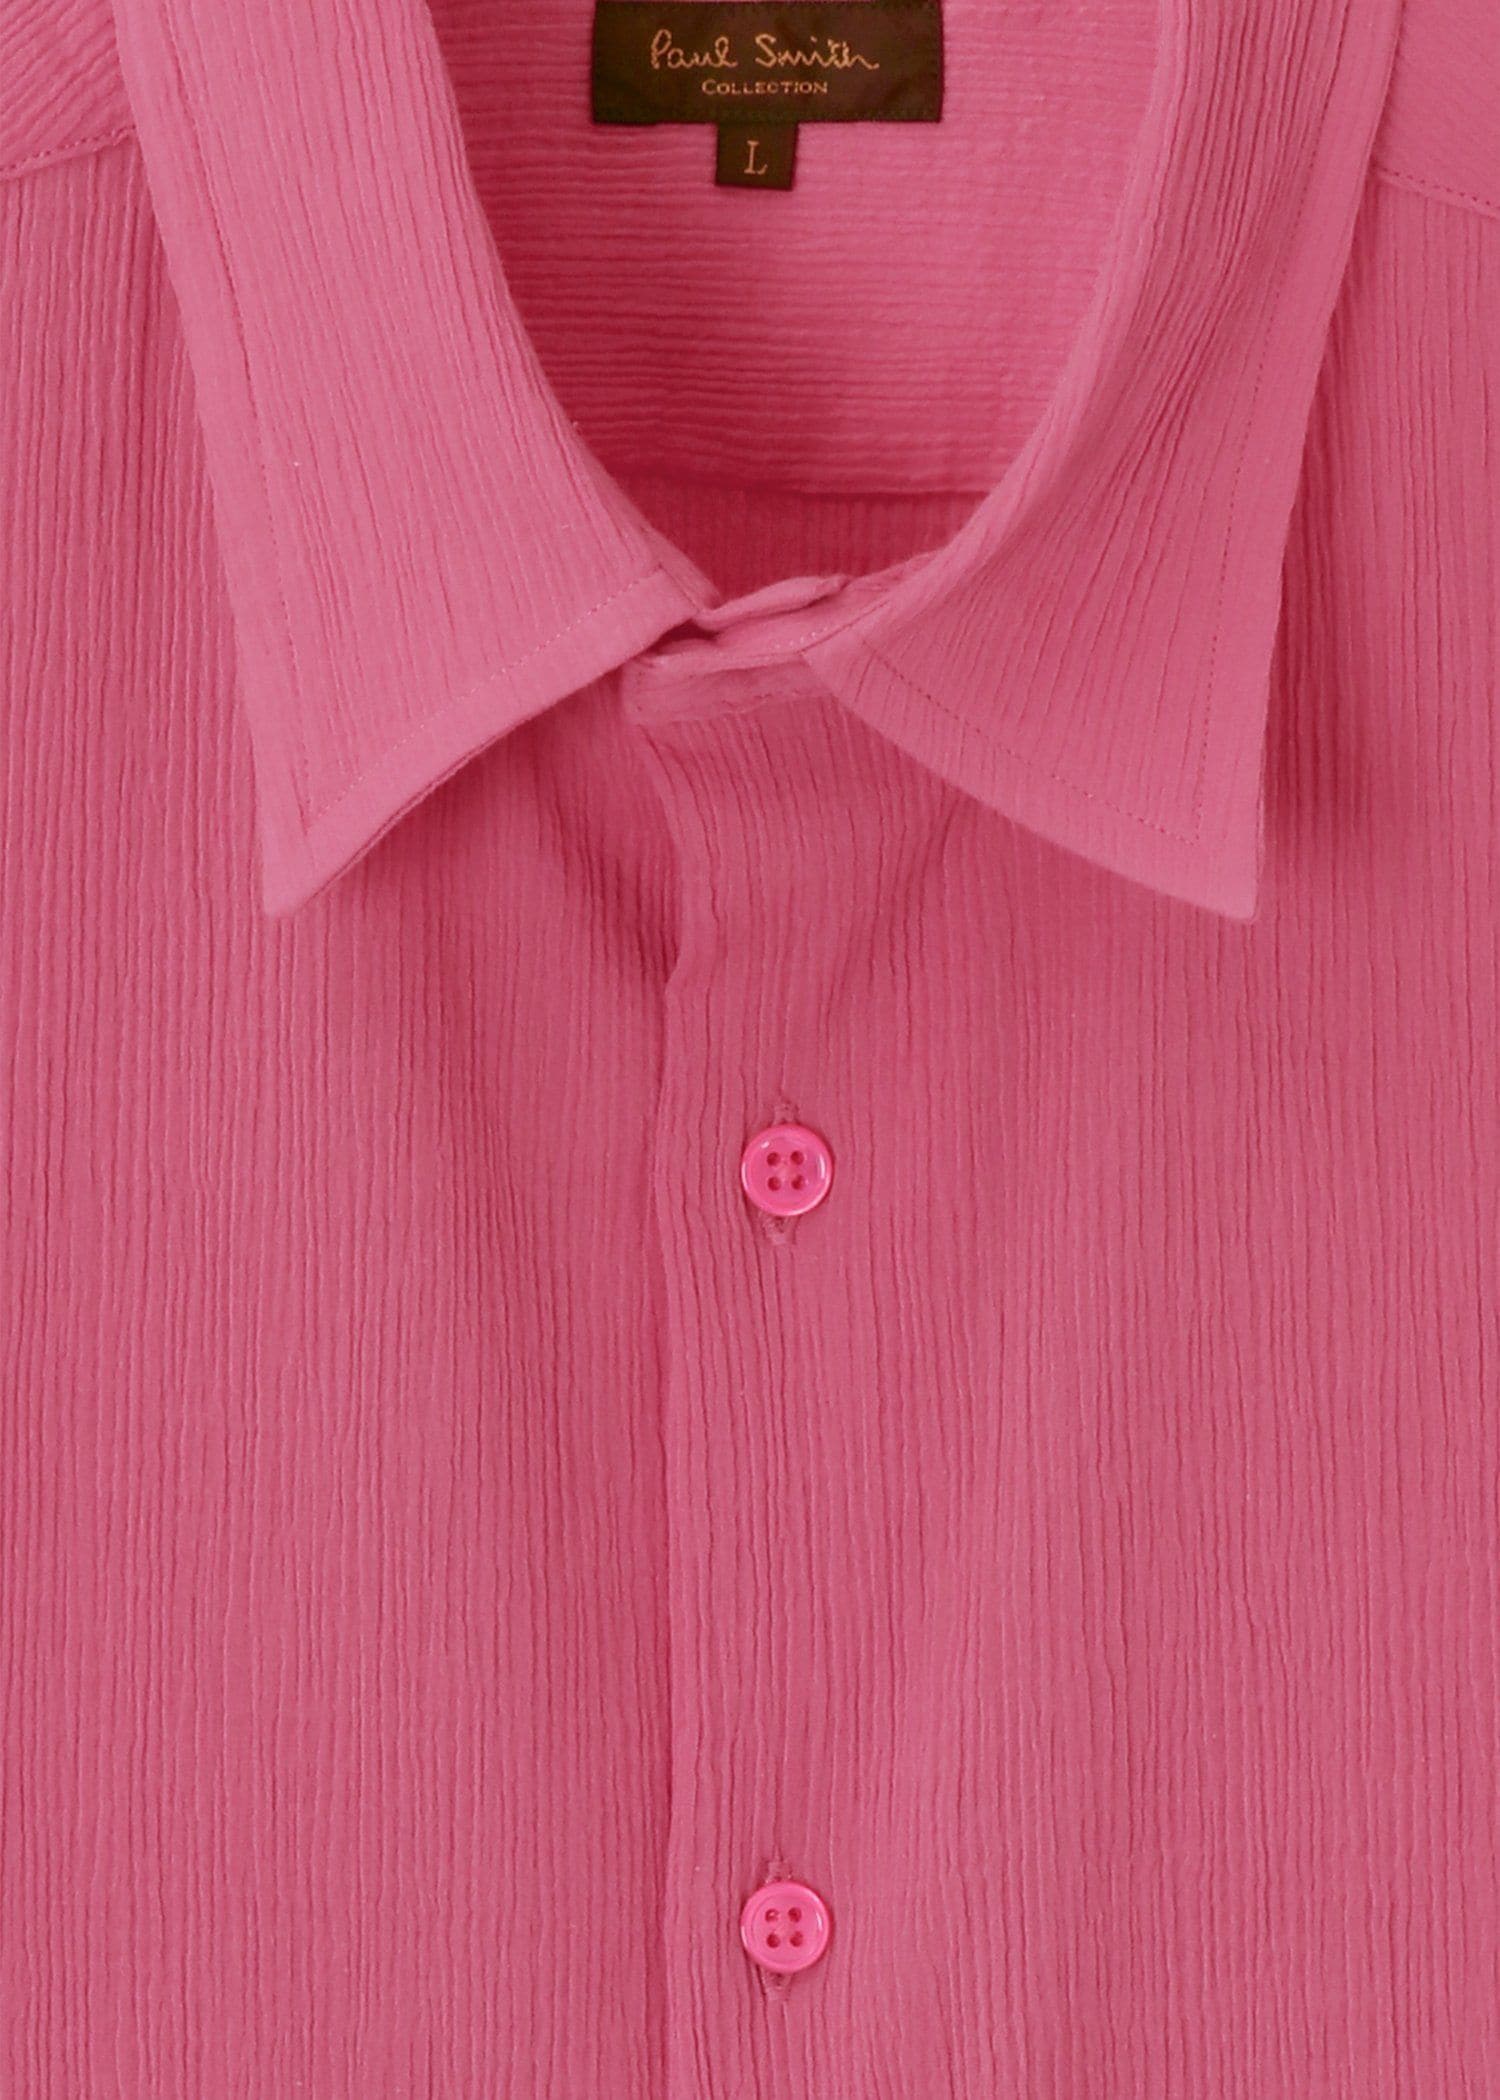 Paul Smith ピンクシャツ | promo-e.si